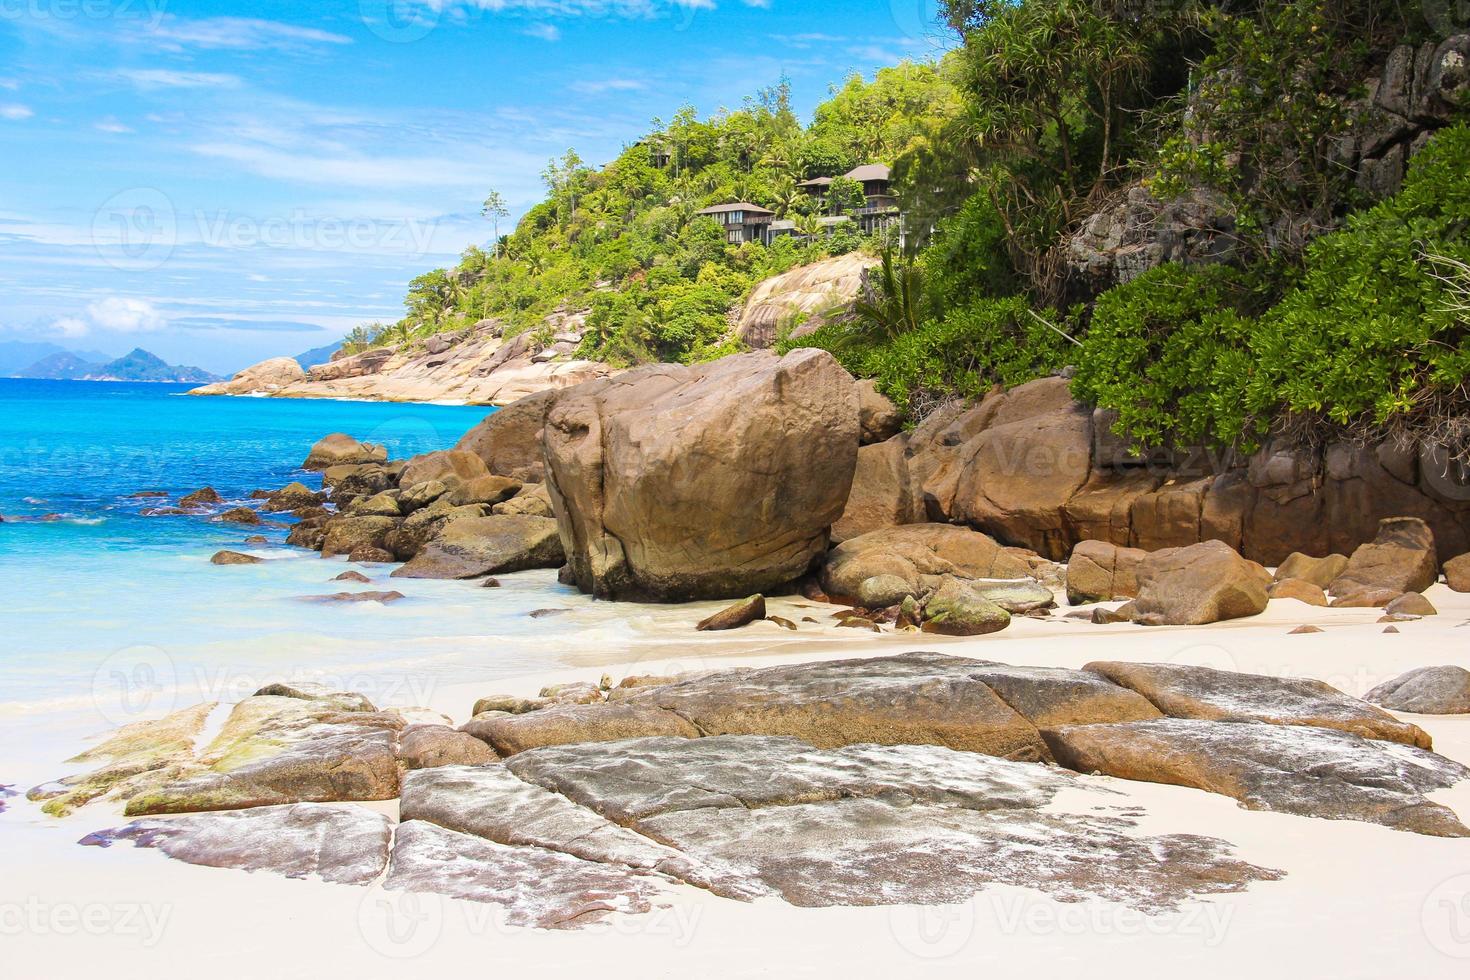 grandes pedras lisas com água turquesa na paradisíaca ilha de seychelles foto